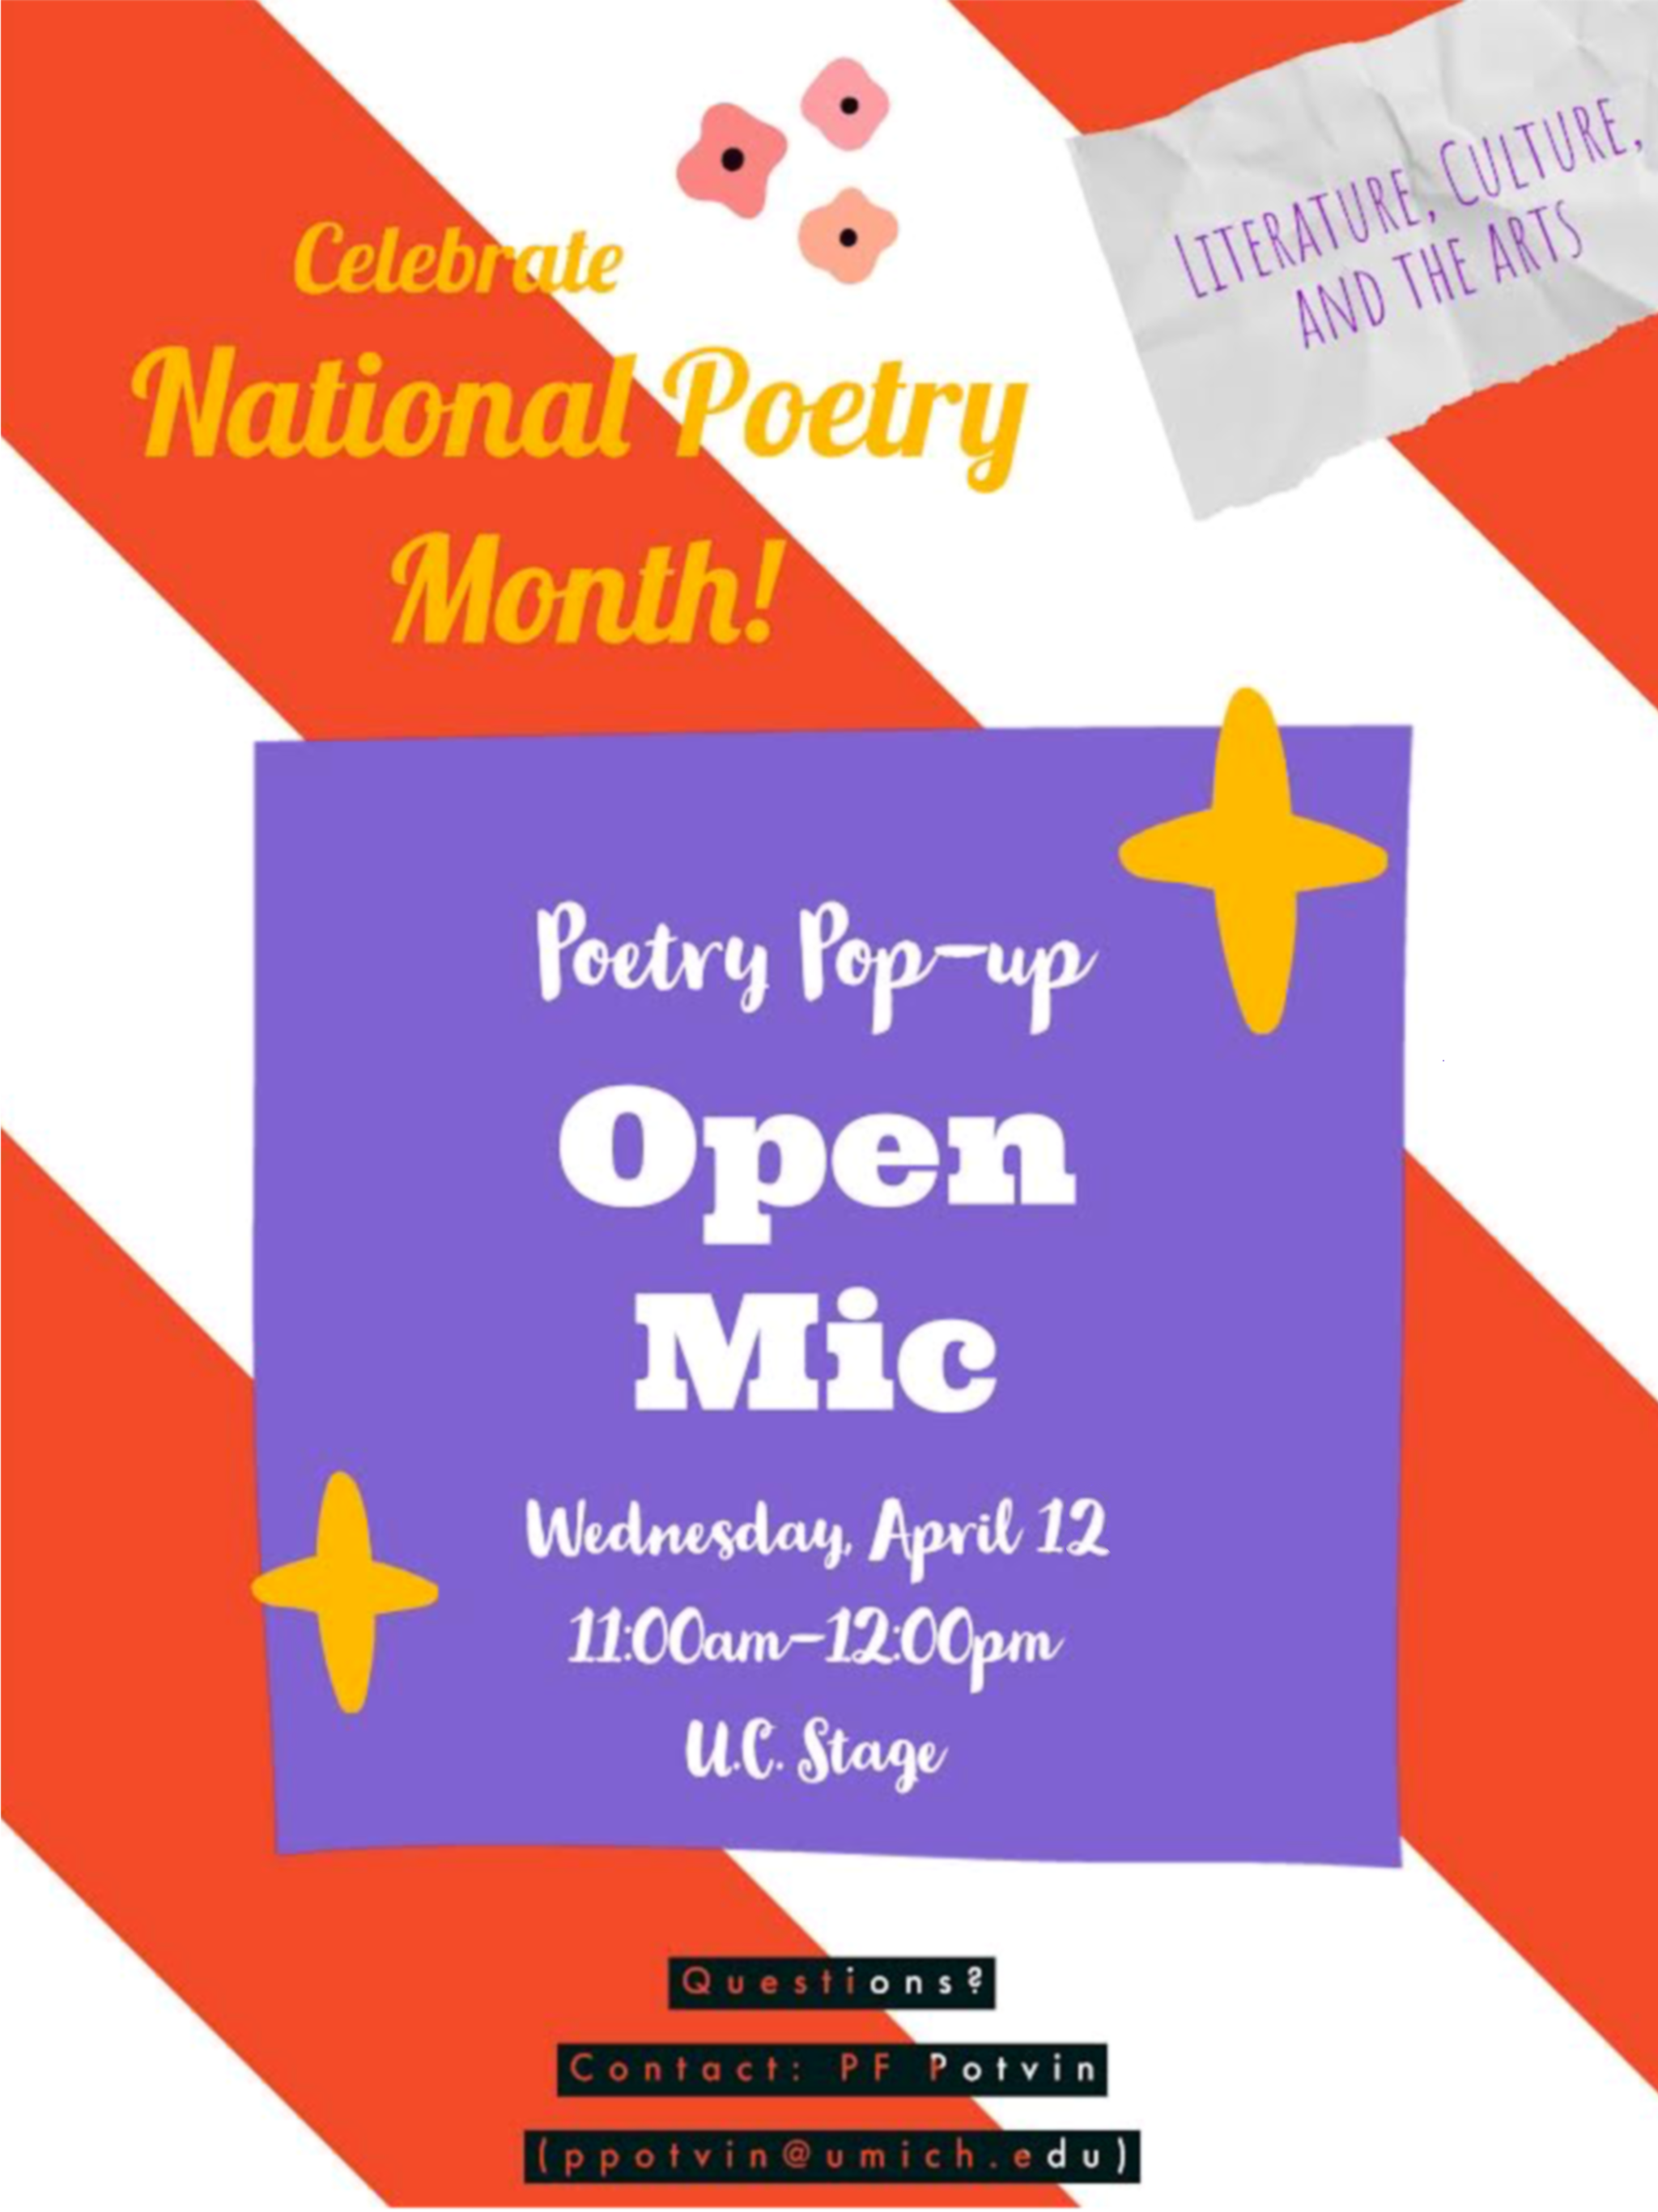 Poetry Pop-up event